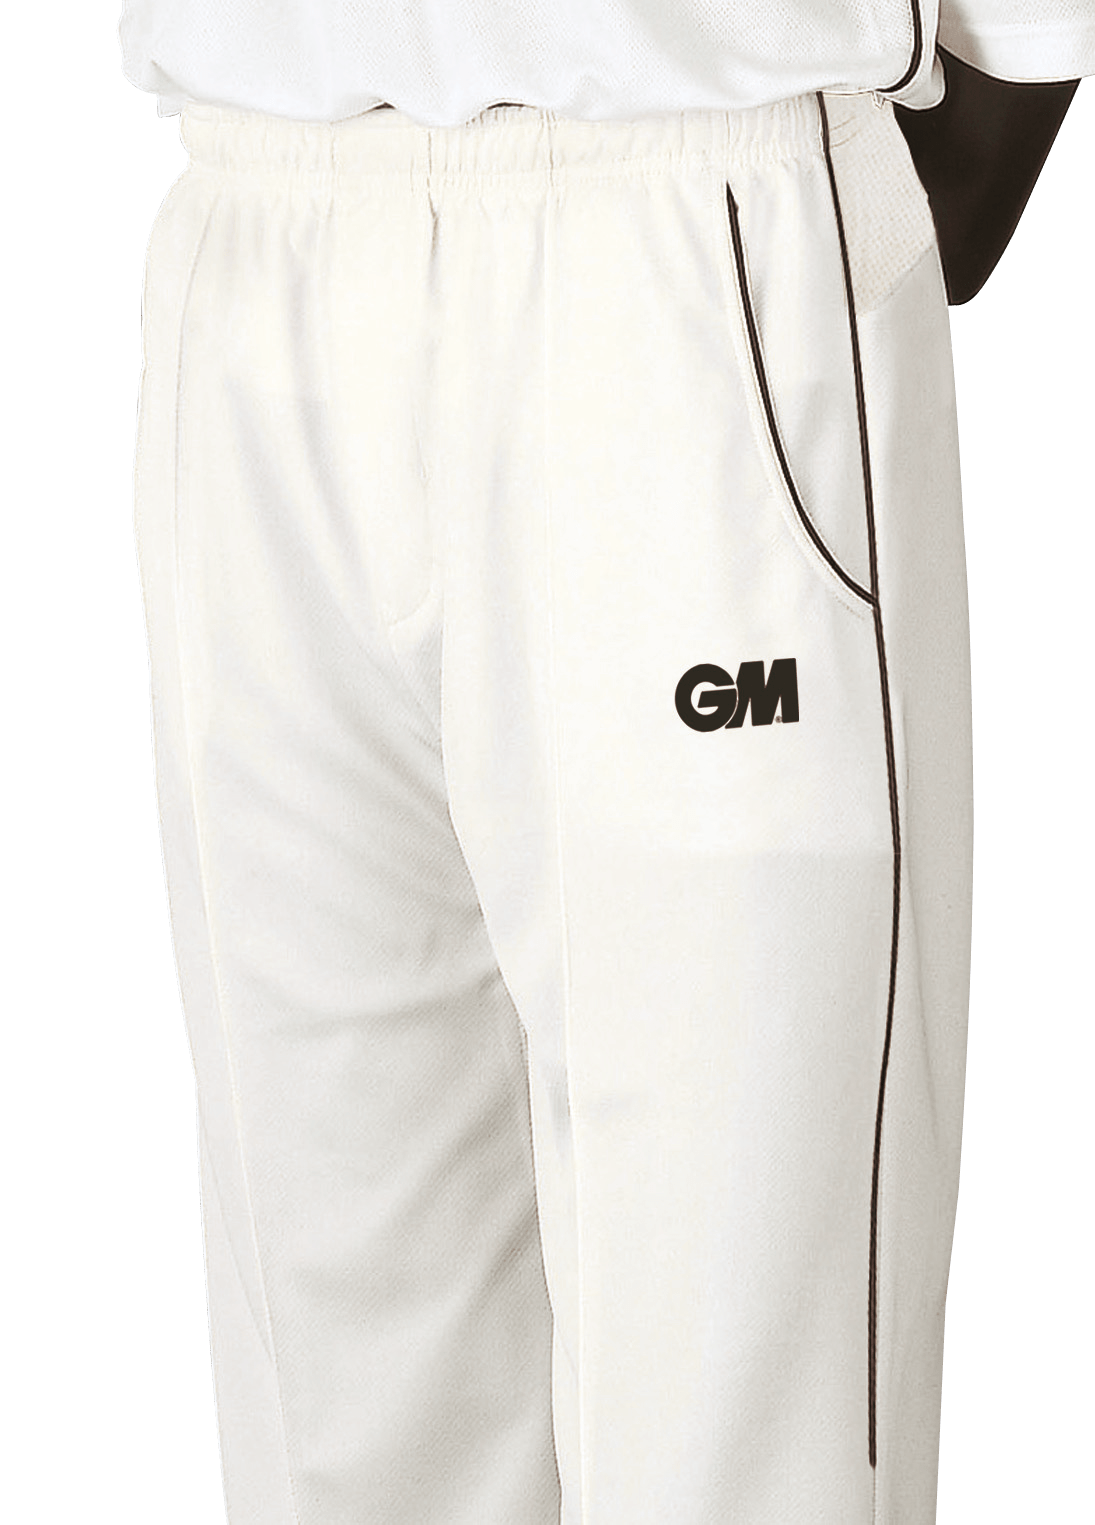 Gunn & Moore Clothing GM Premier Cream Cricket Trousers